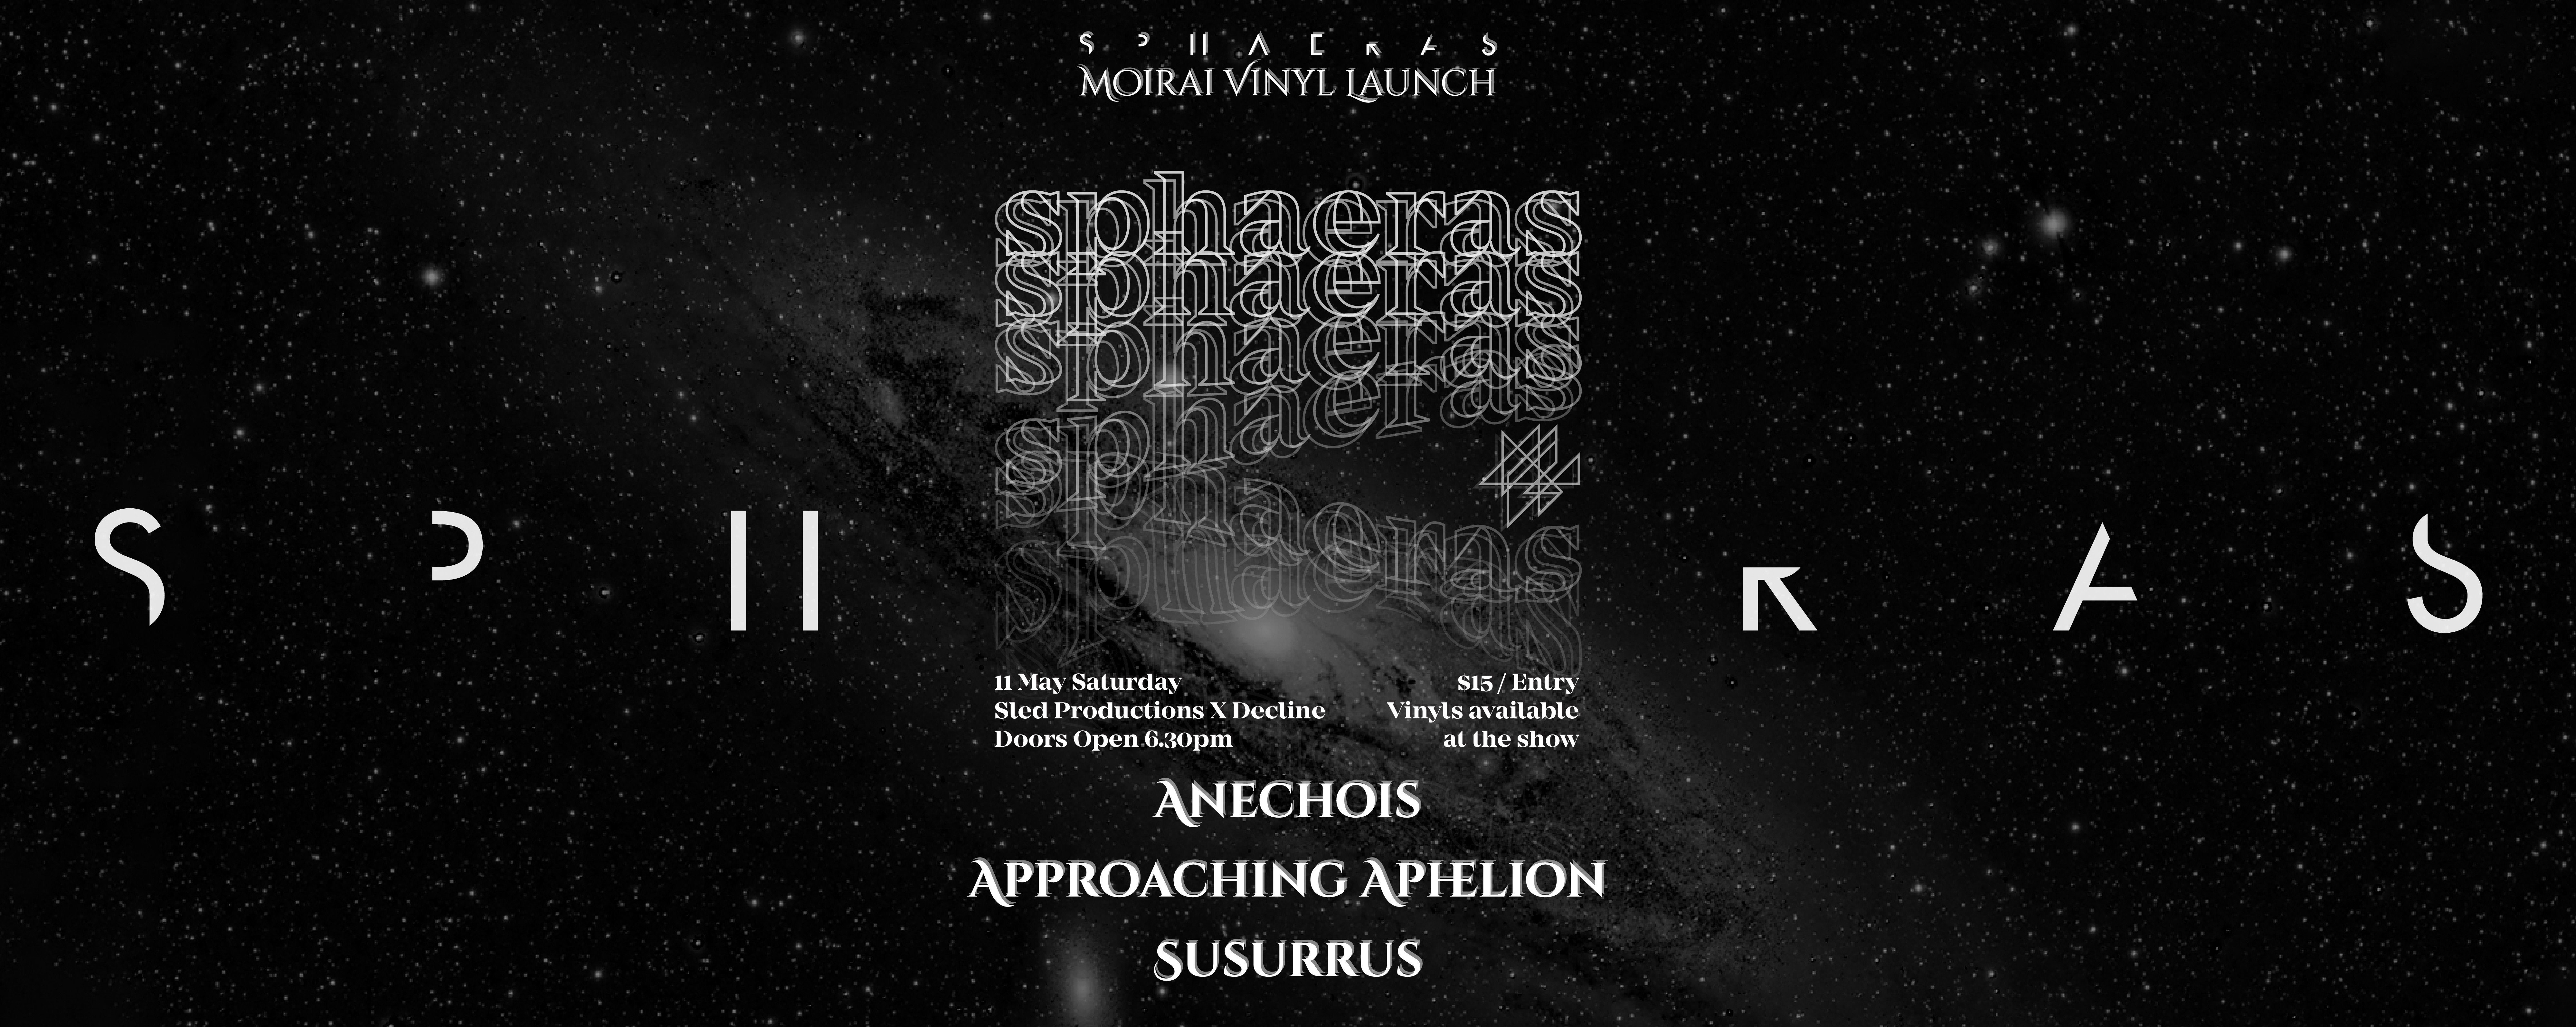 Sphaeras 'Moirai' Vinyl Launch